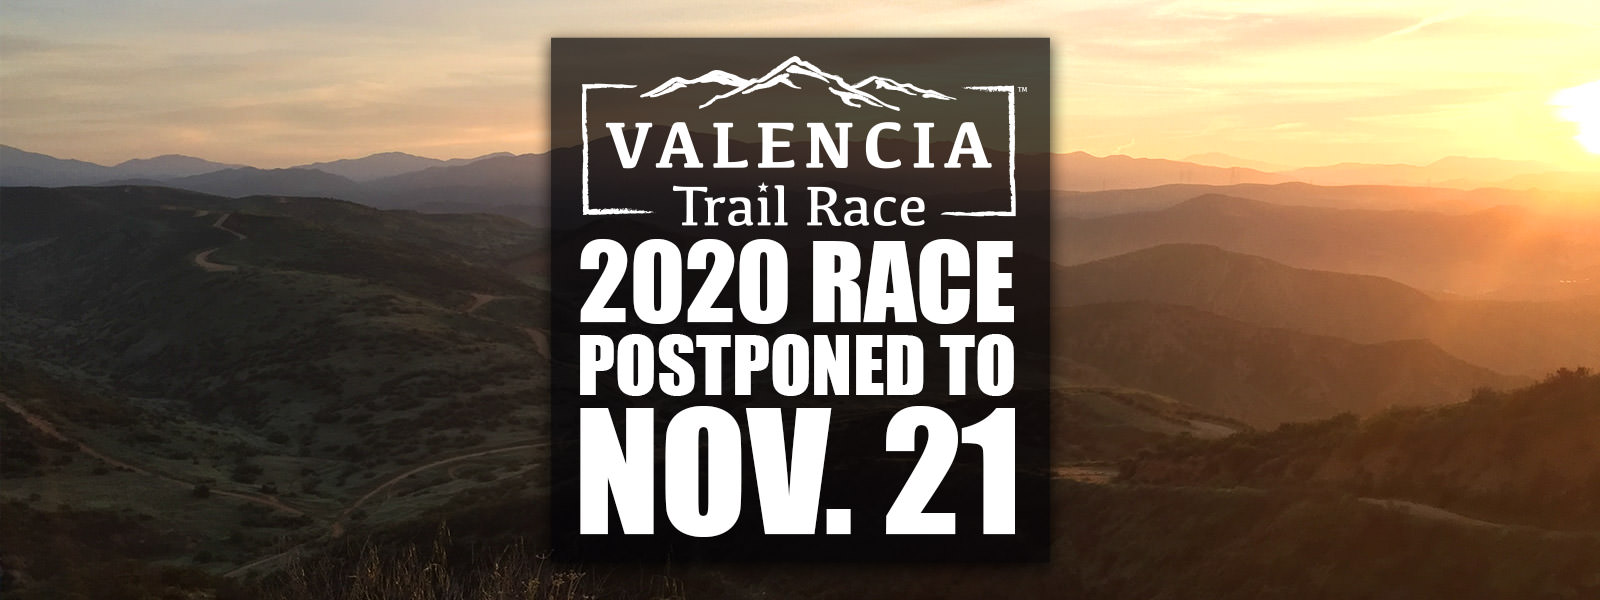 Postponed to Nov. 21